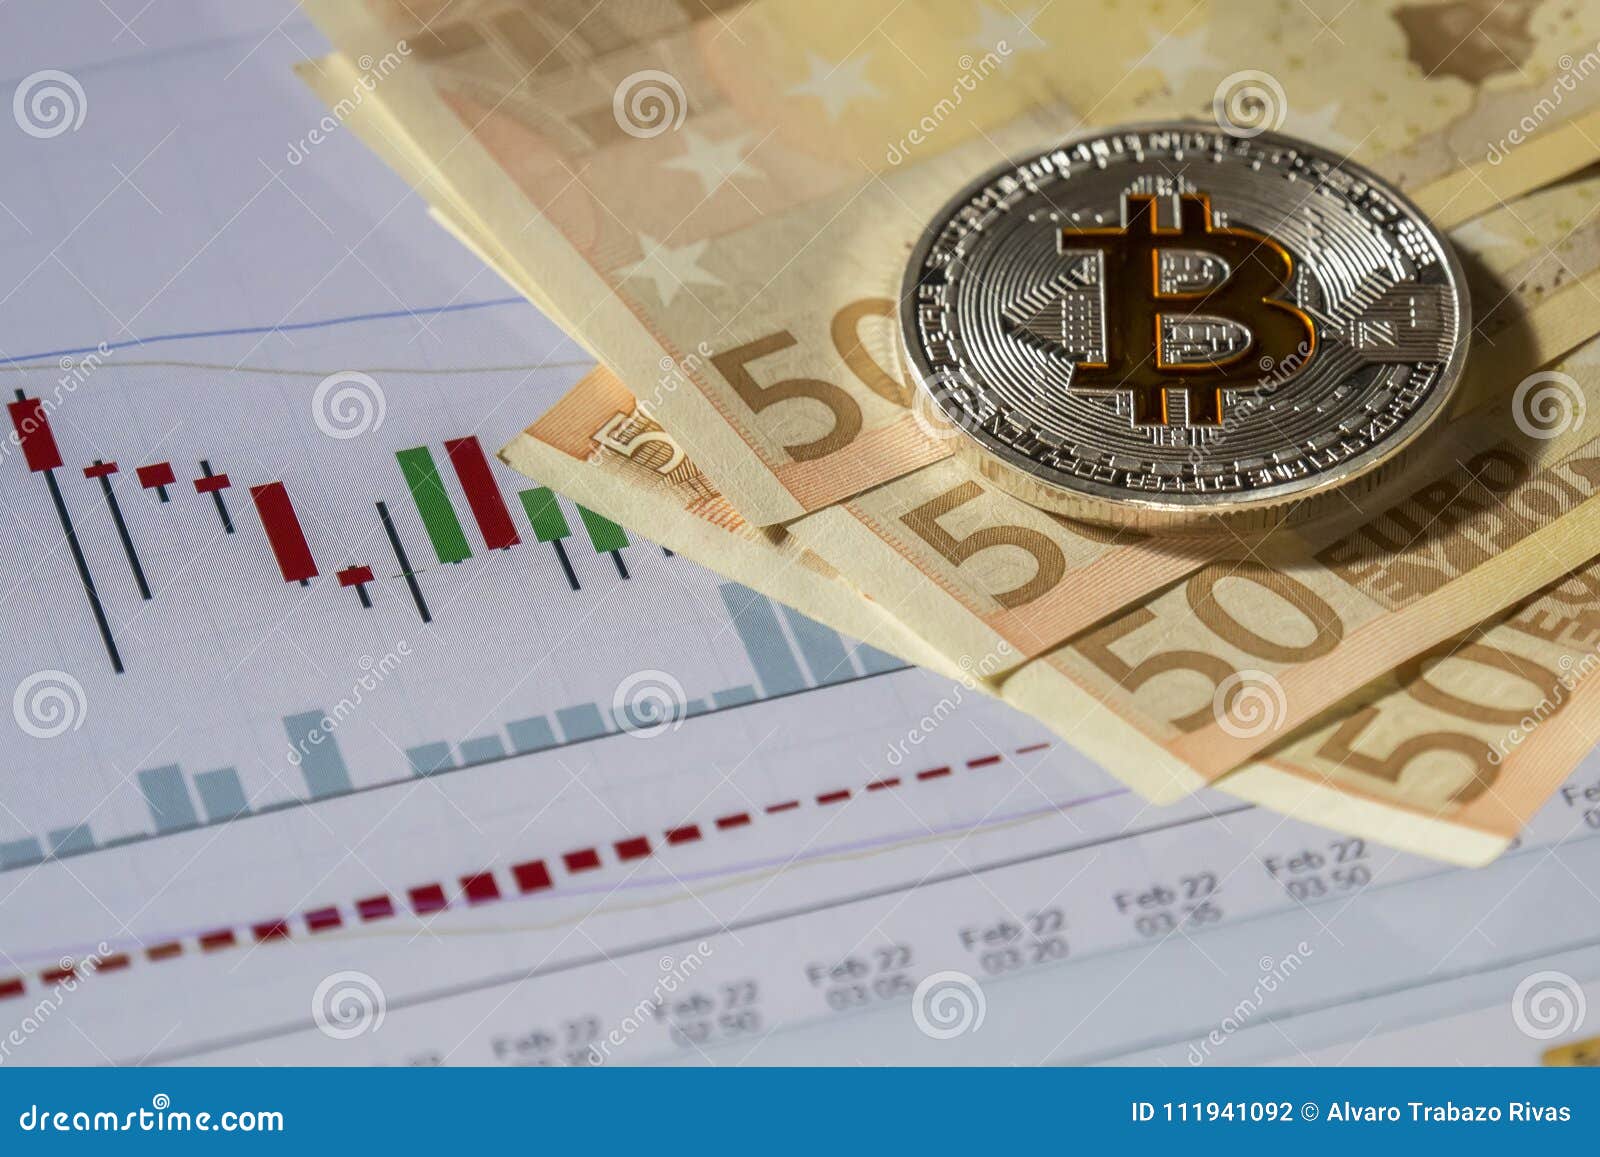 trading euro bitcoin bitcoin valuta nazionale